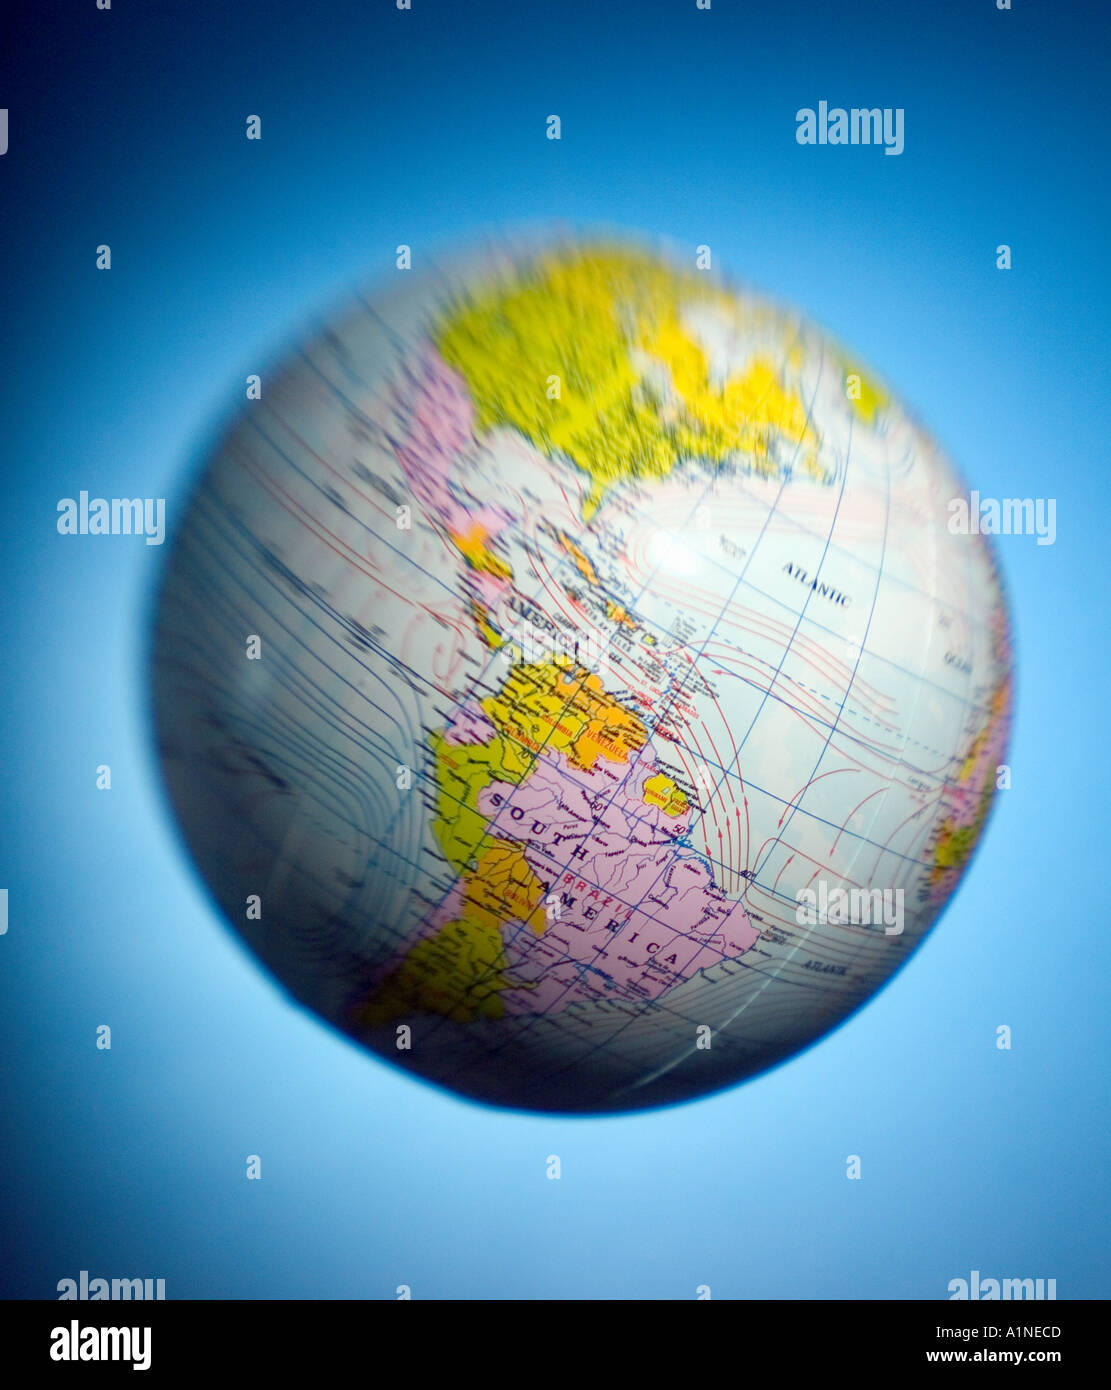 Globe terrestre Banque D'Images